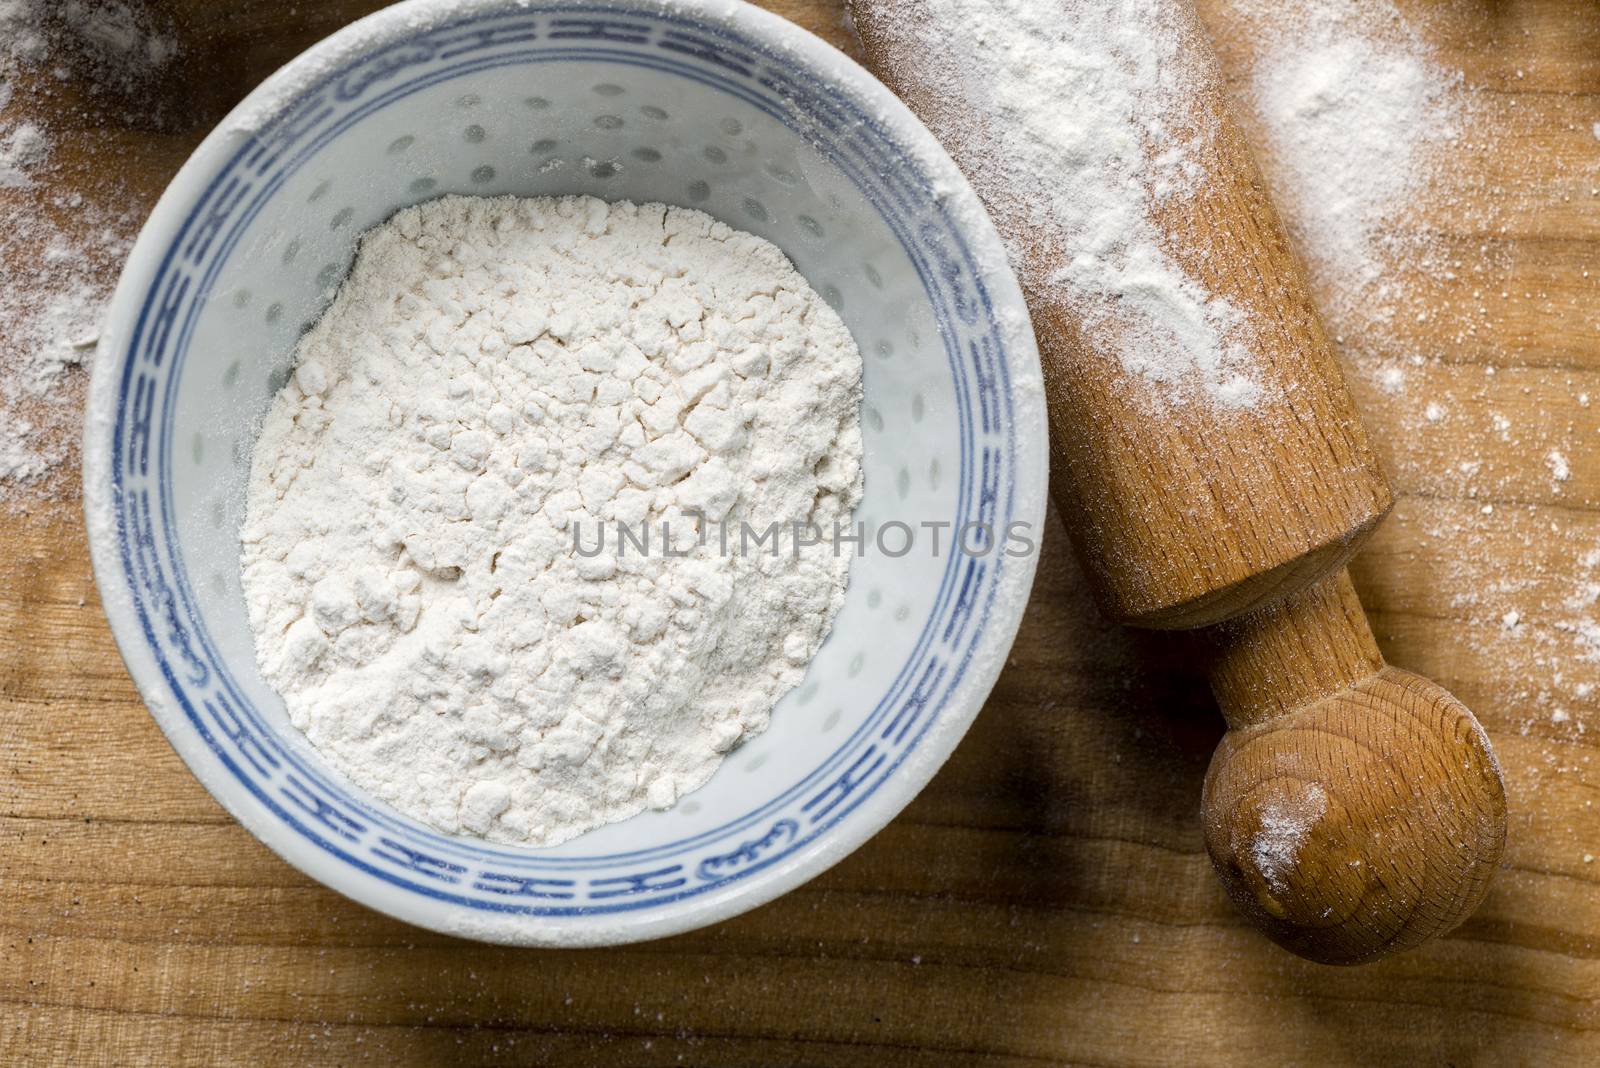 making ravioli, cutting the dough, stuffing the italian pasta by verbano